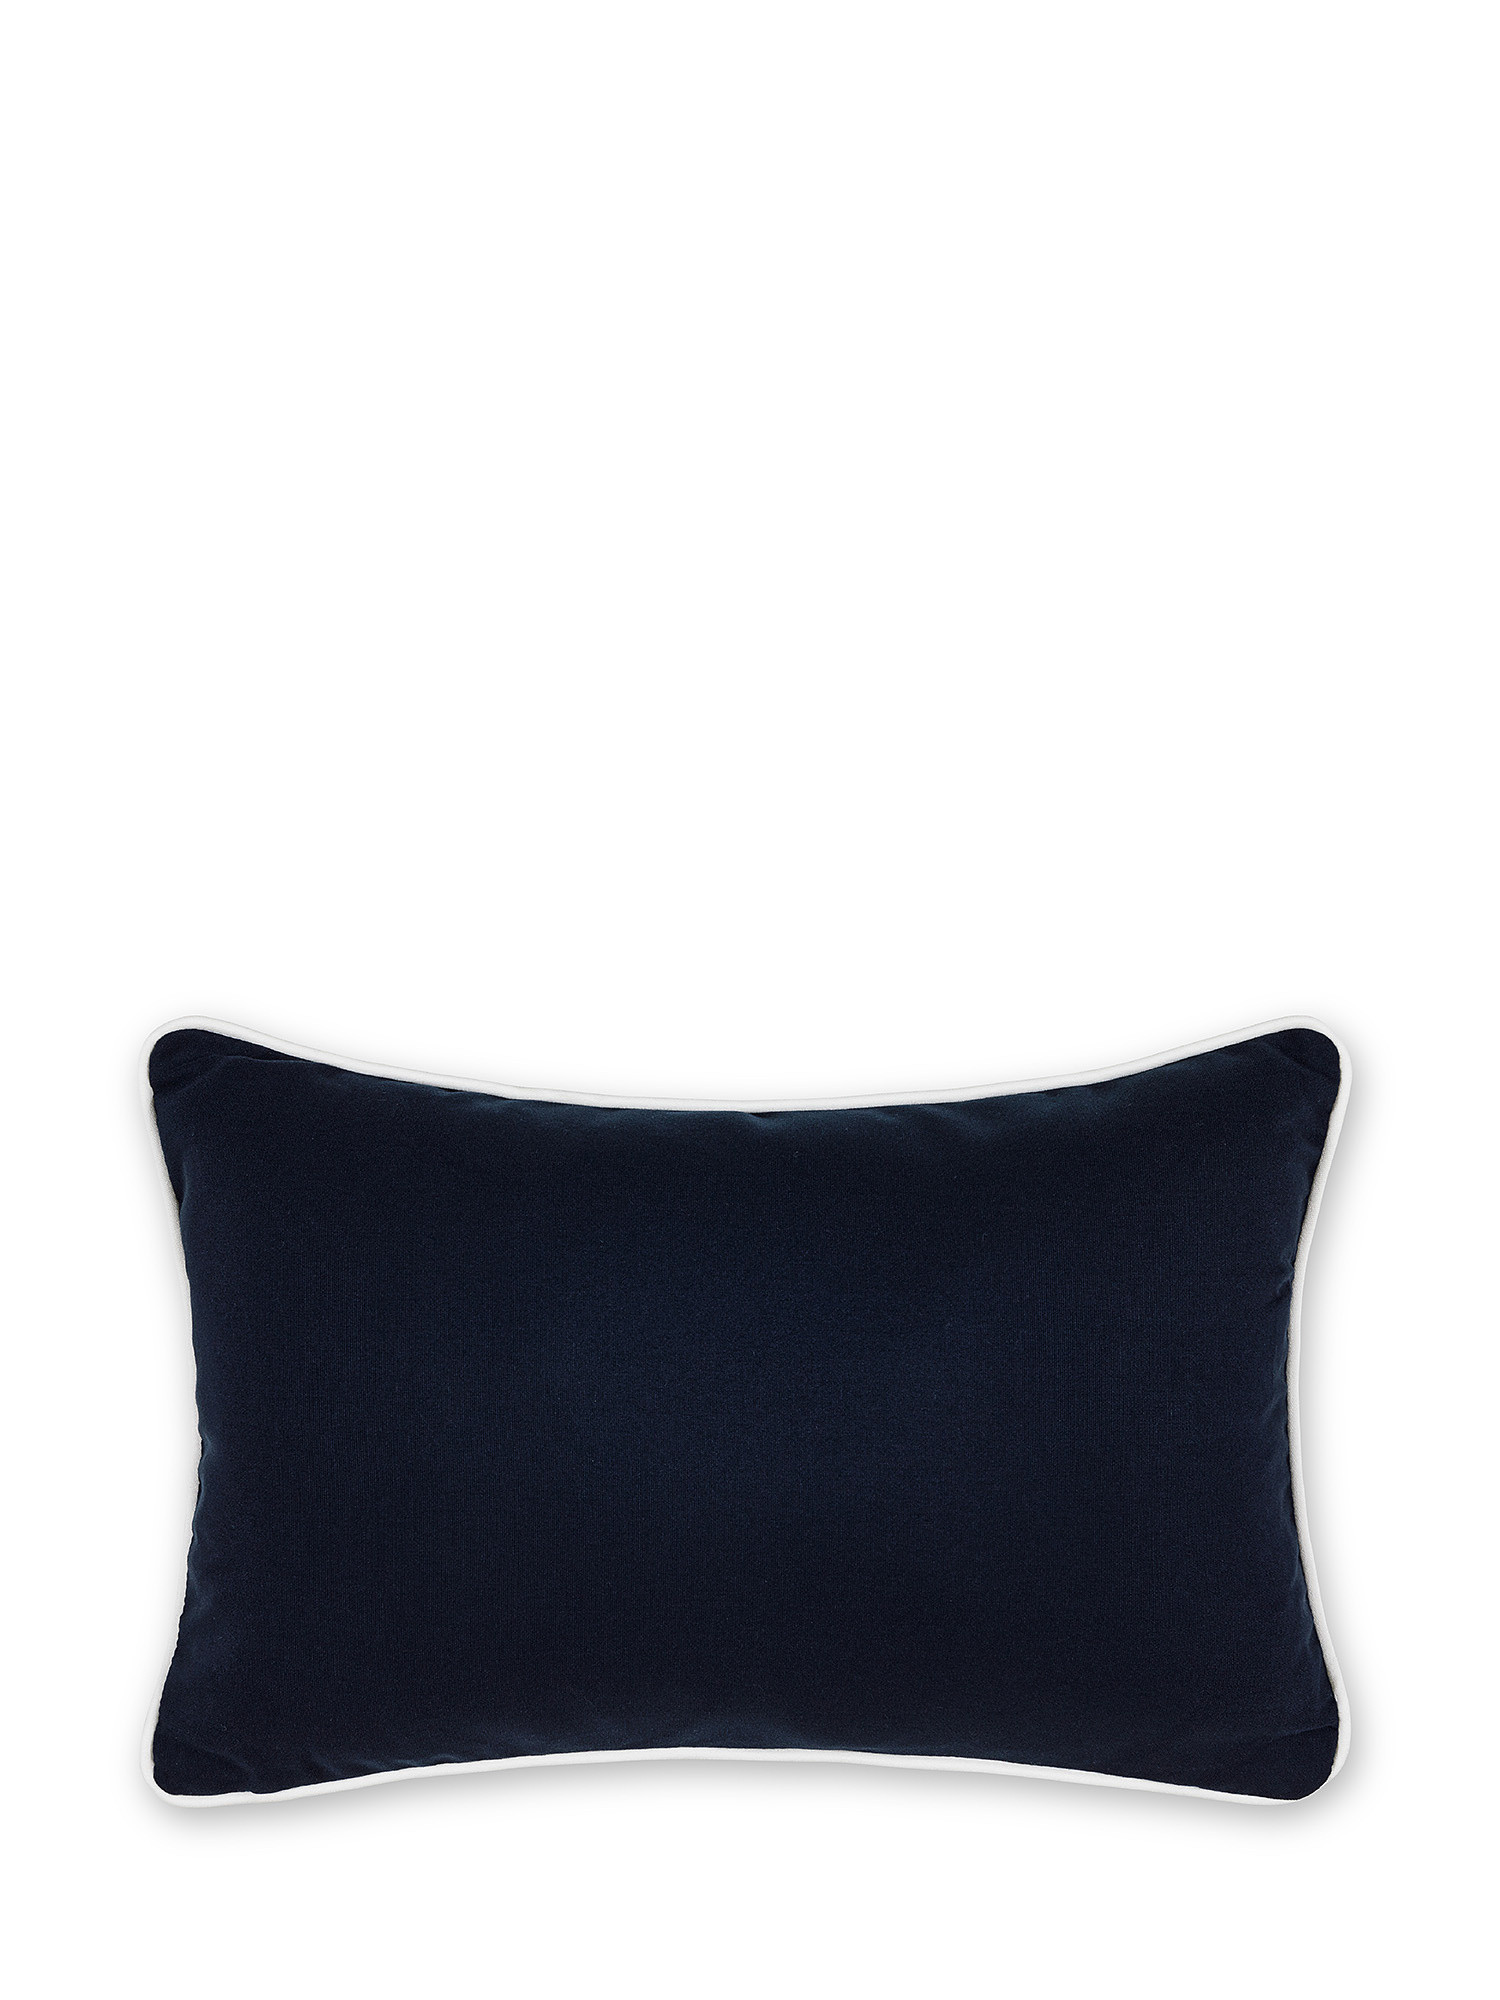 Cuscino da esterno in teflon 30x50cm, Blu, large image number 0